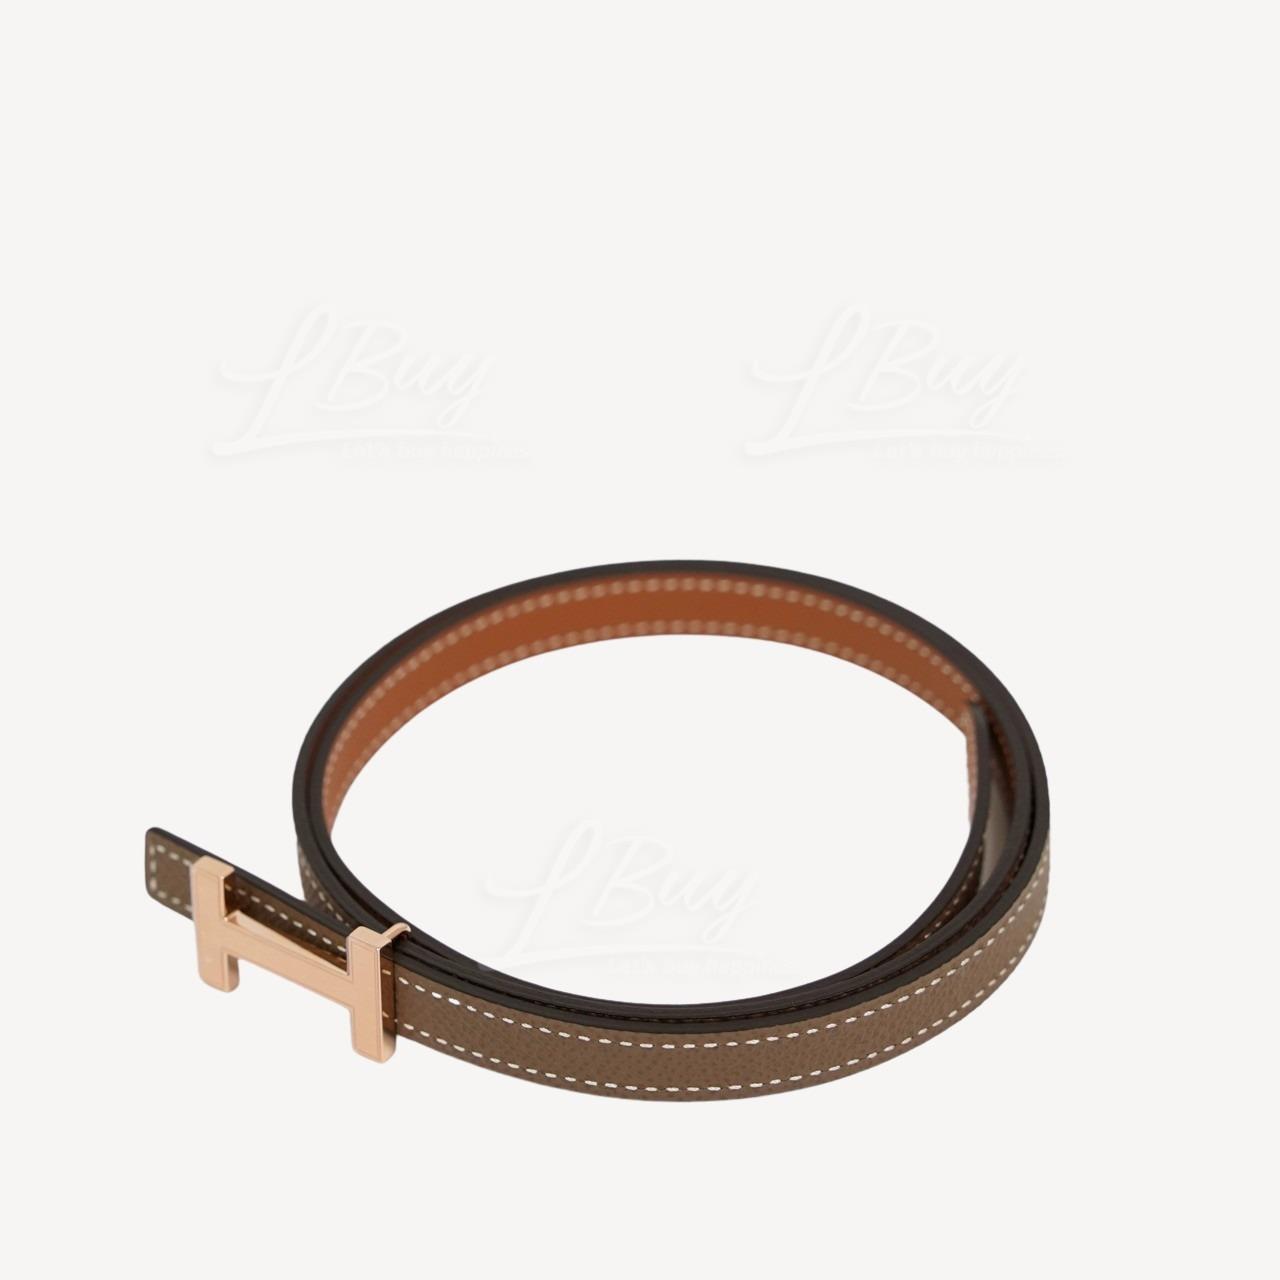 Focus belt buckle & Reversible leather strap 13 mm